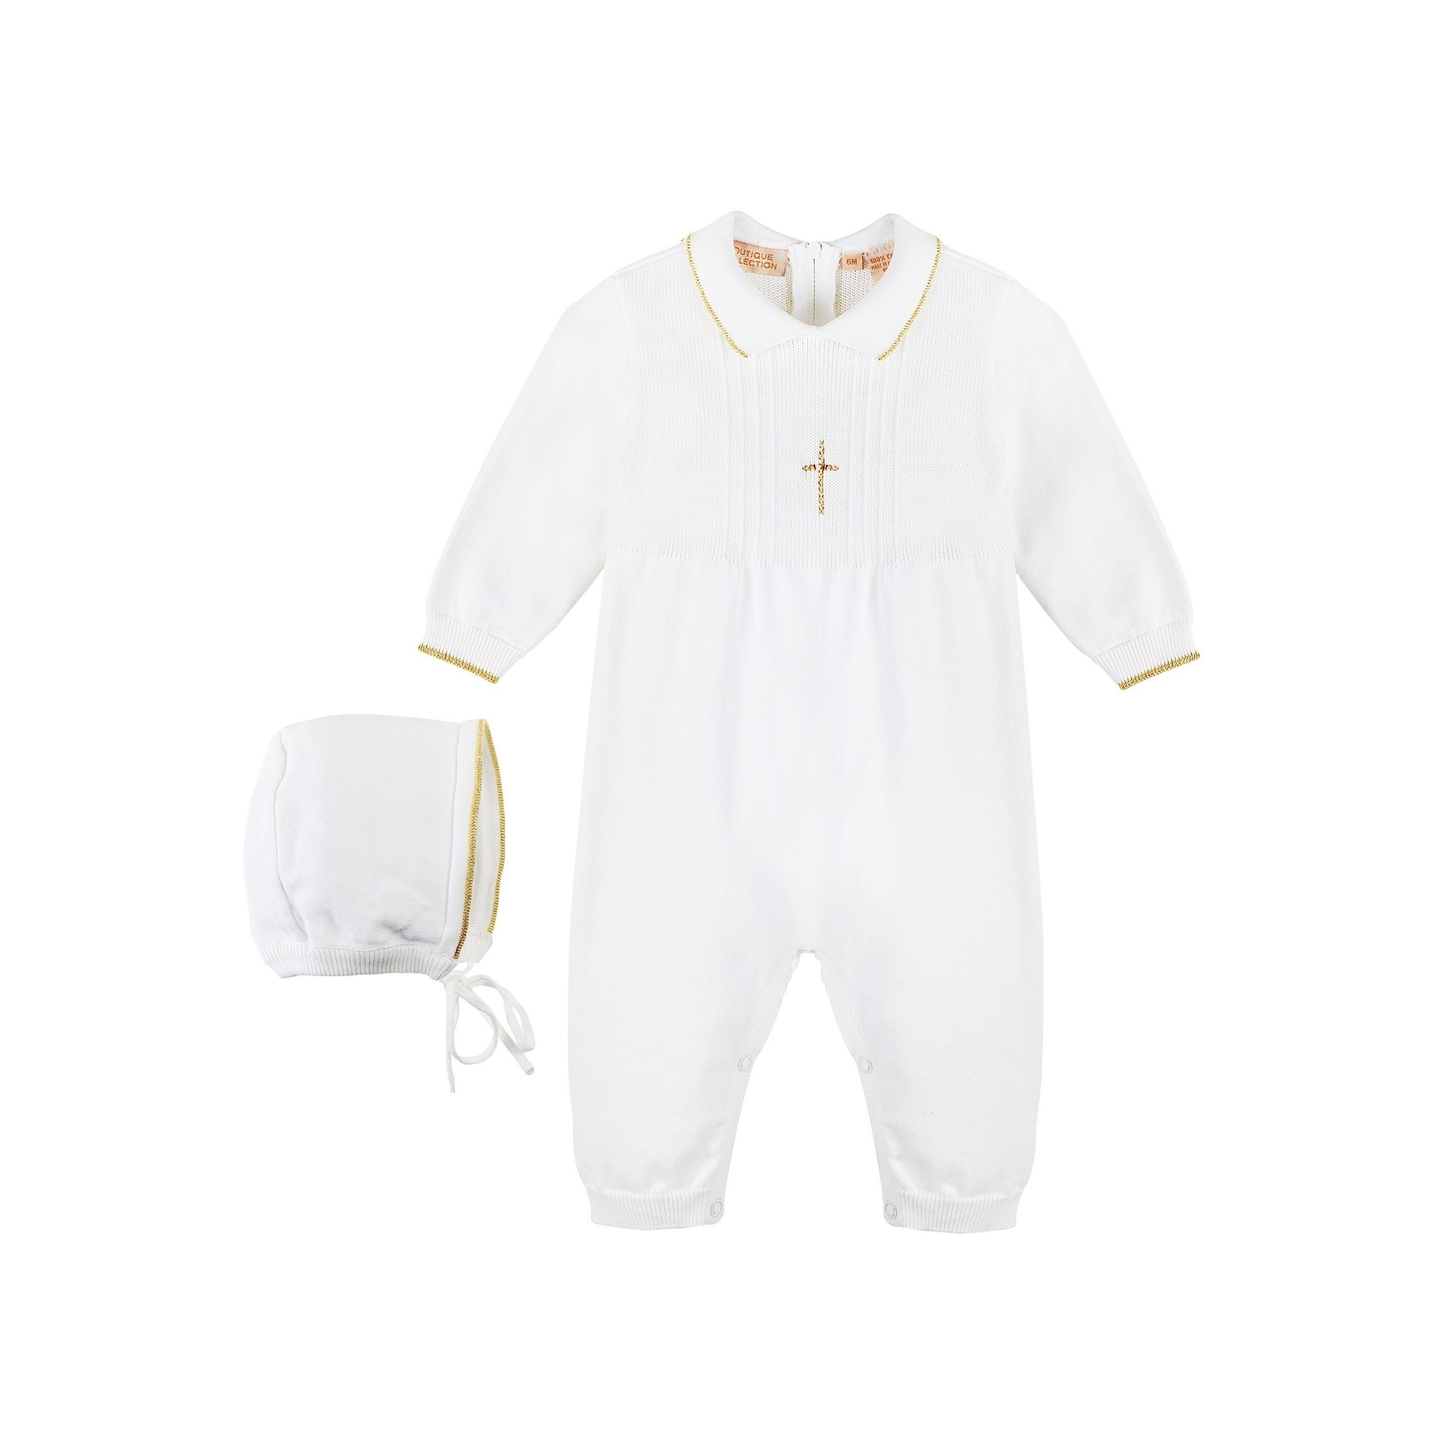 Baby Boy Gold Trim Knit Outfit w/Cross